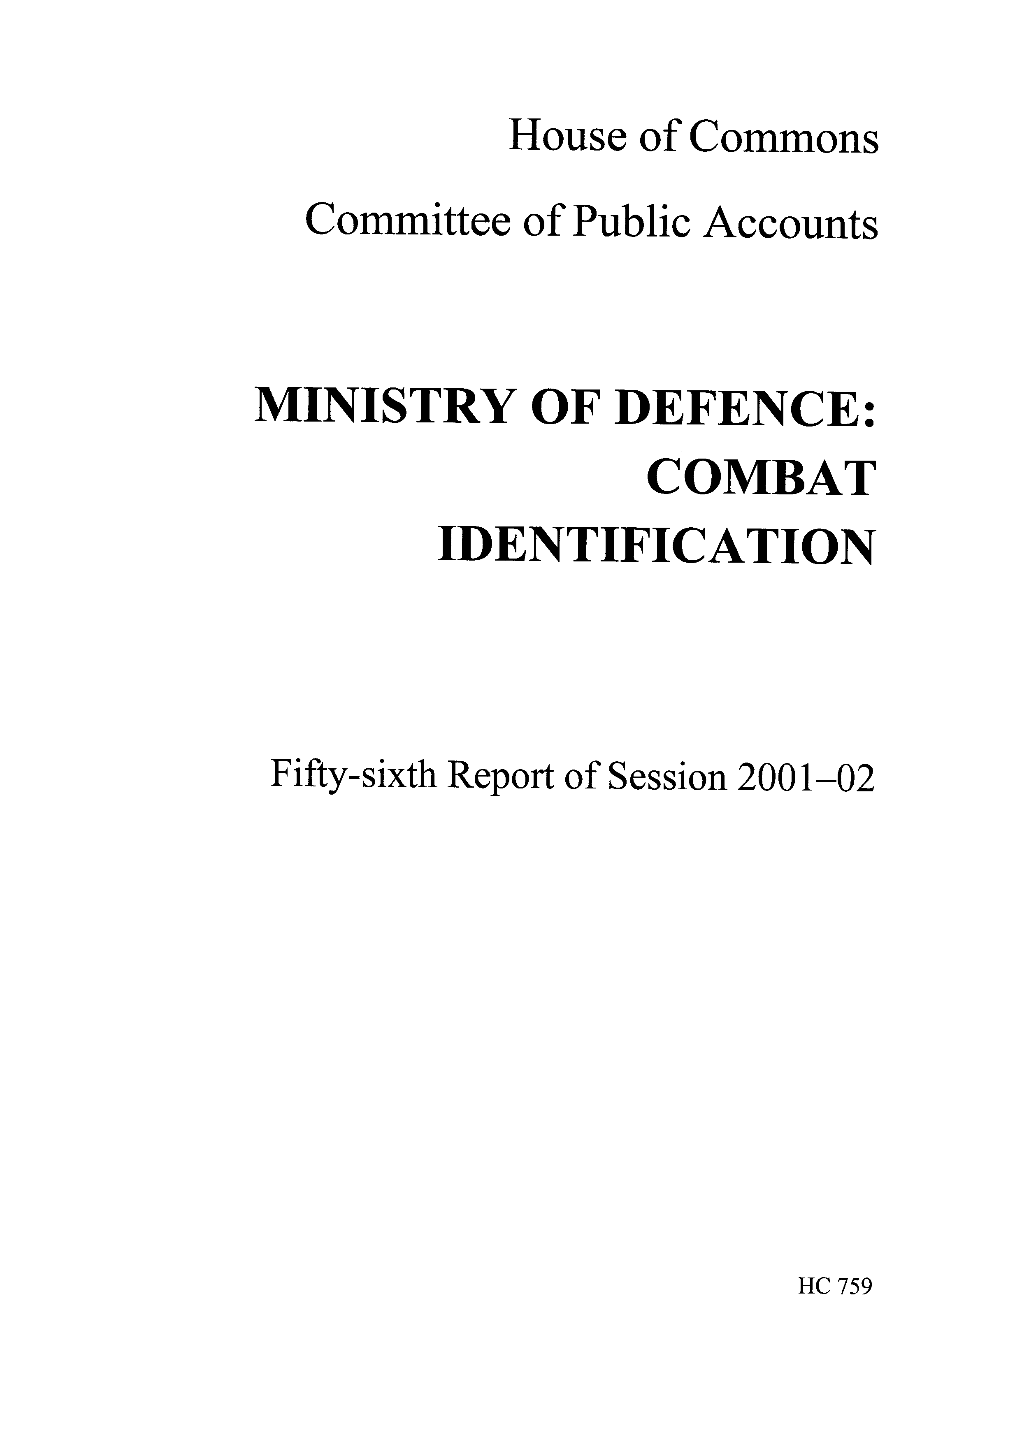 PDF Version of Report